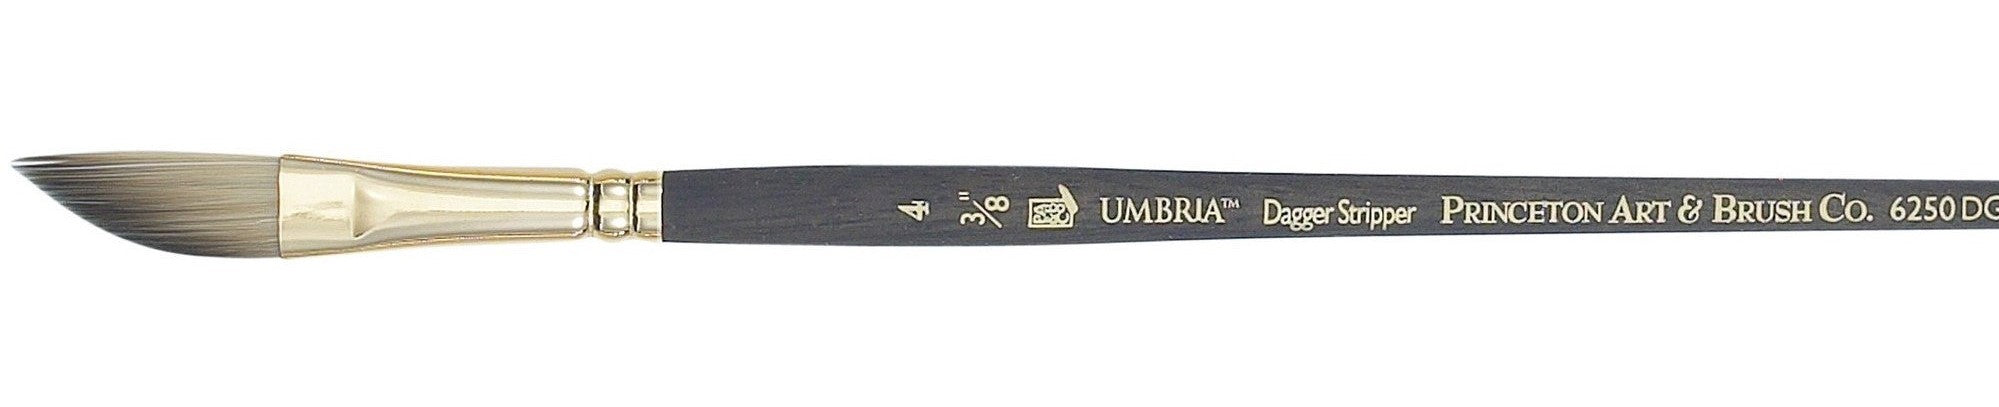 Princeton - Umbria Short Brushes - Dagger Striper - 6250DG-2 (4438837952599)